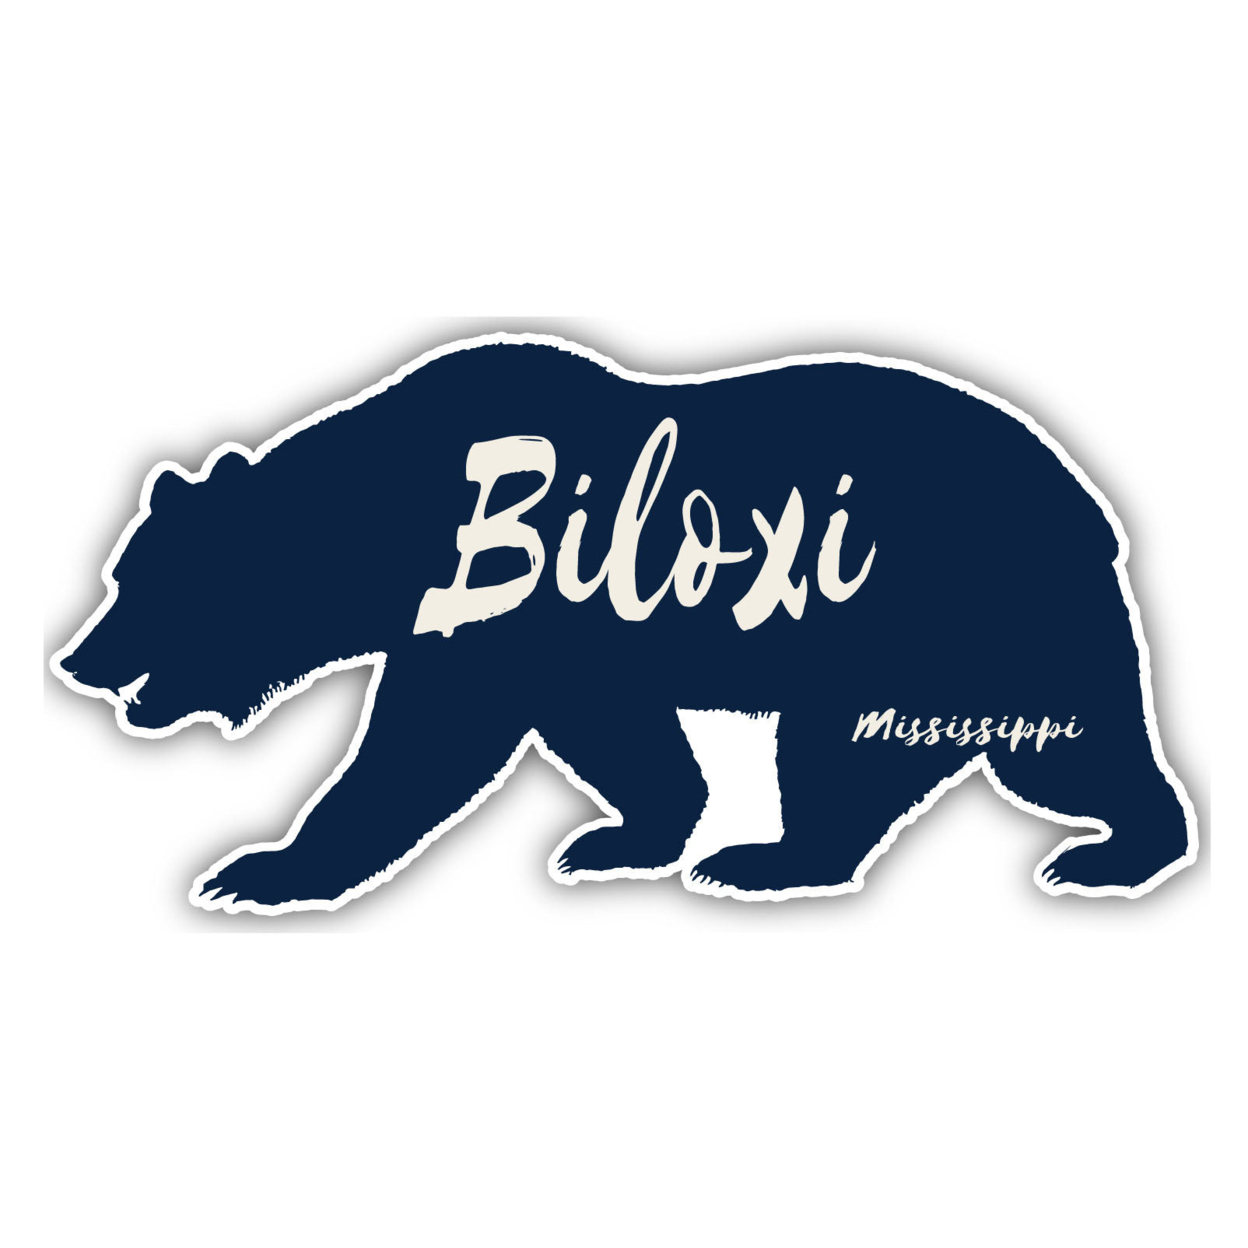 Biloxi Mississippi Souvenir Decorative Stickers (Choose Theme And Size) - Single Unit, 4-Inch, Camp Life